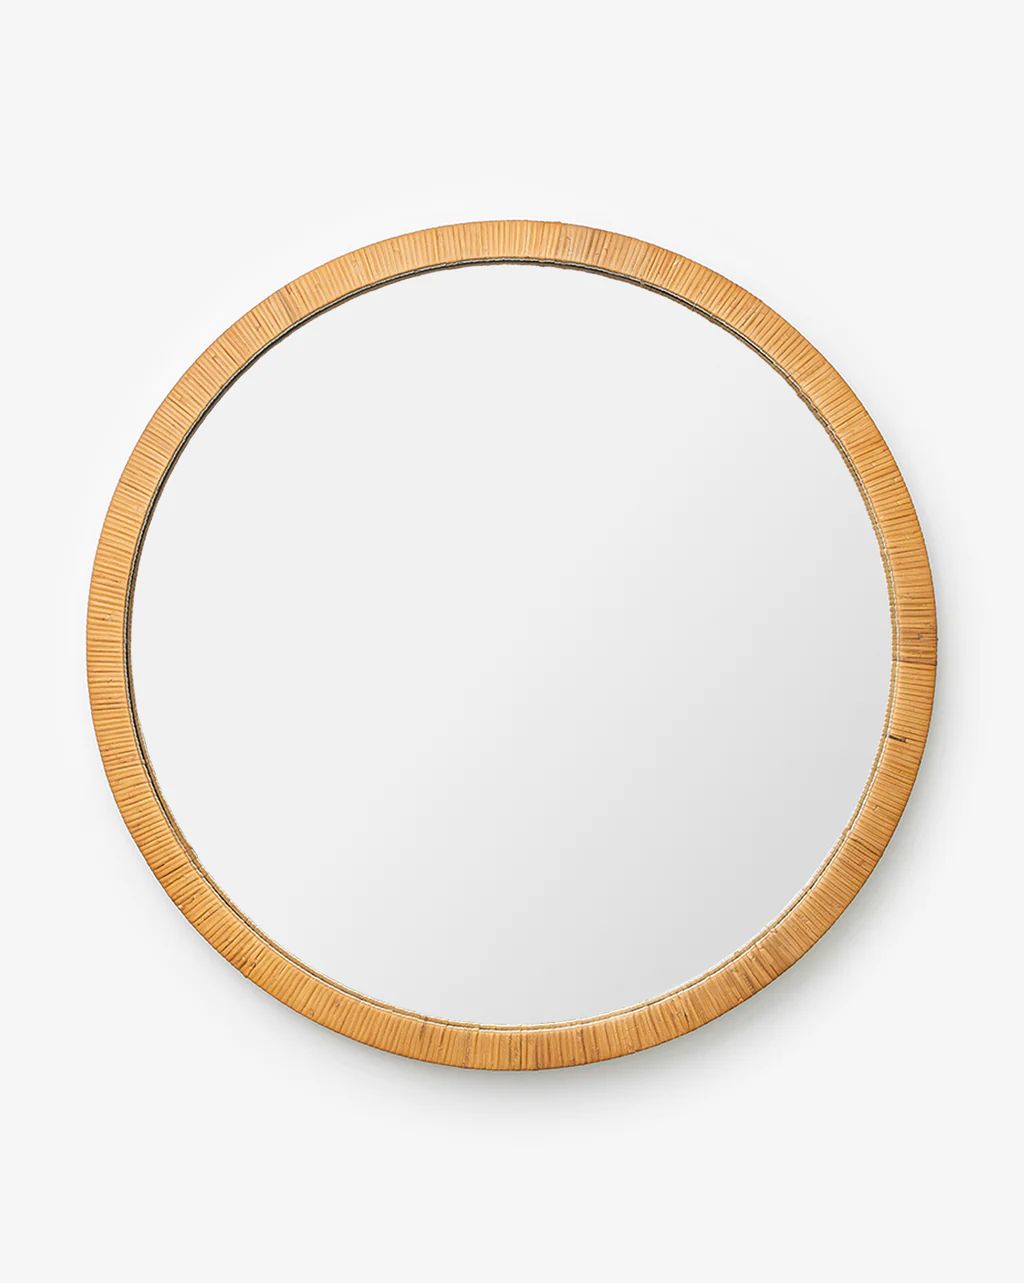 Jovie Woven Circle Mirror | McGee & Co.